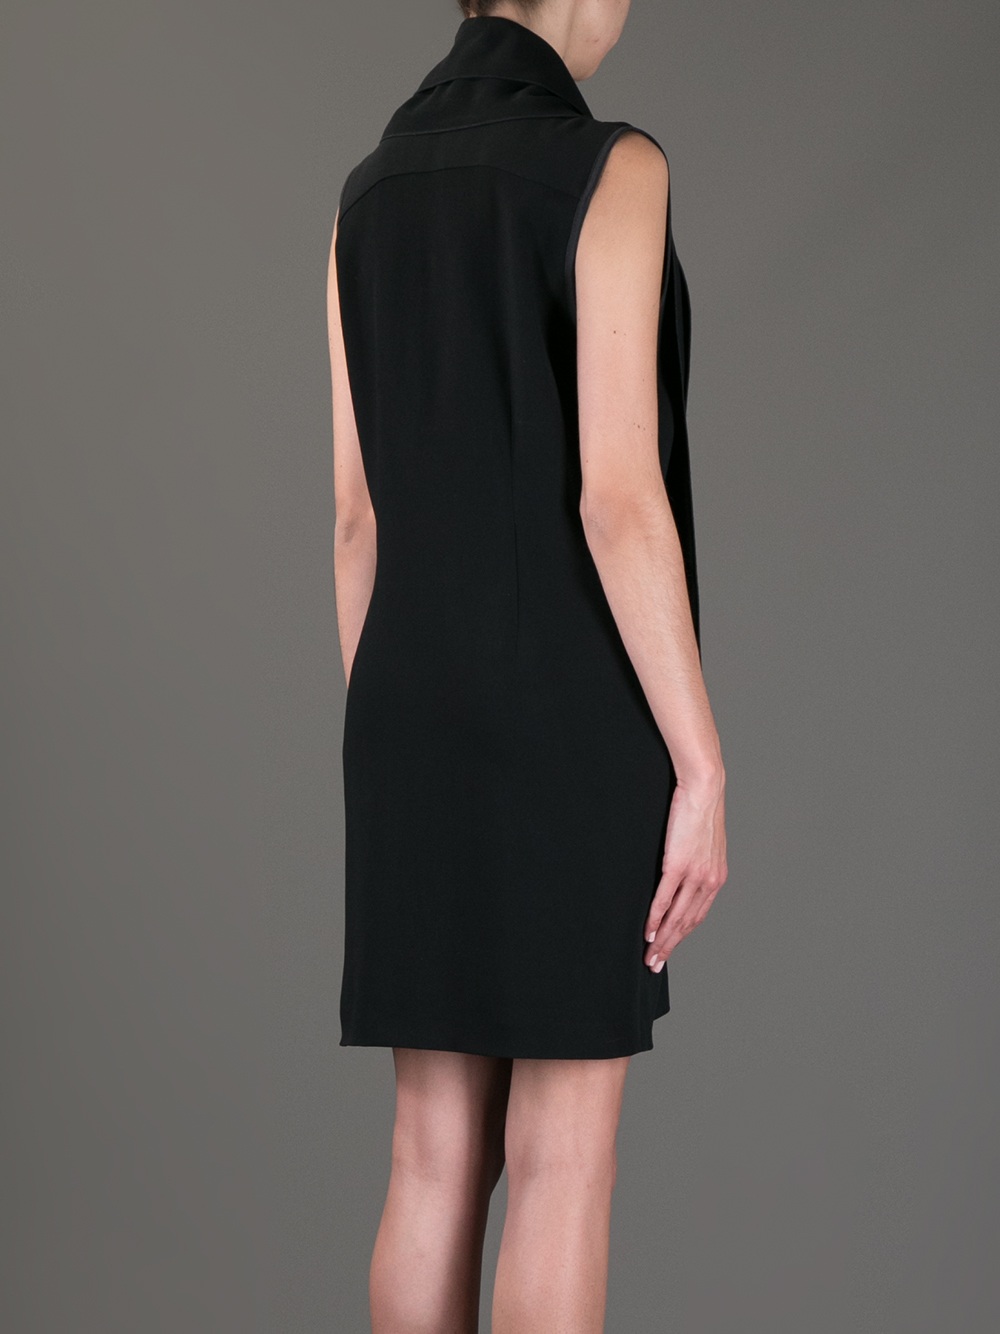 Lyst - Sharon Wauchob Scarf Detail Dress in Black